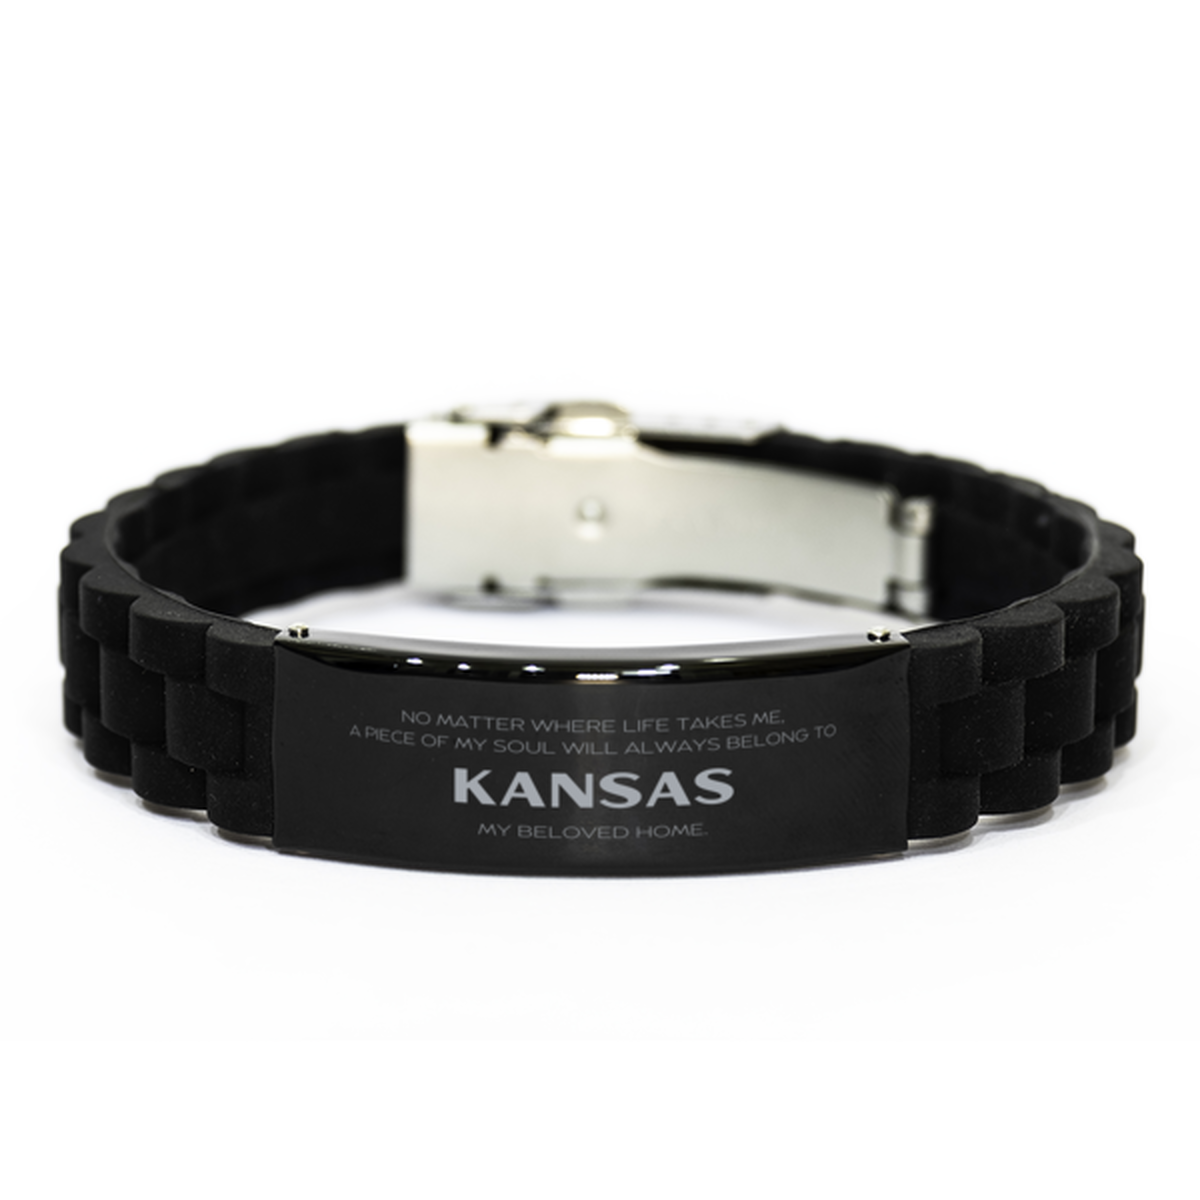 Love Kansas State Gifts, My soul will always belong to Kansas, Proud Black Glidelock Clasp Bracelet, Birthday Unique Gifts For Kansas Men, Women, Friends